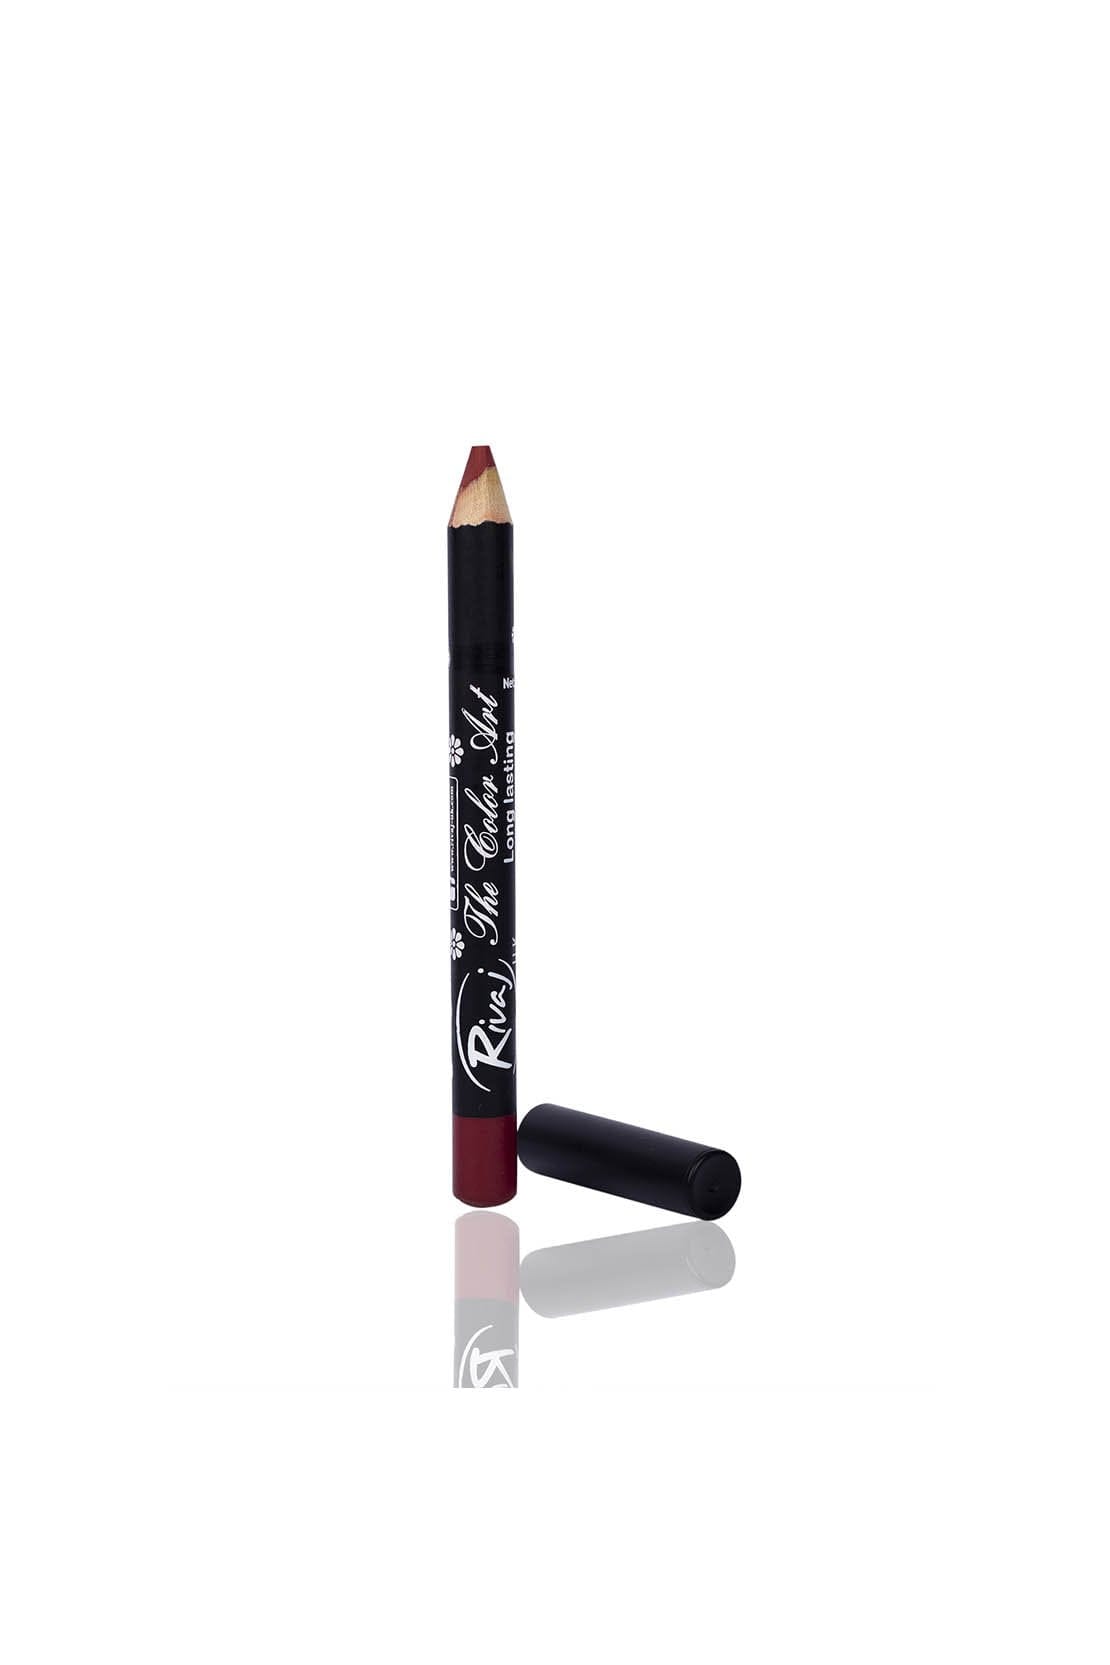 Rivaj UK Cosmetics Lip & Eye Pencil Shade #049 Rose Madder